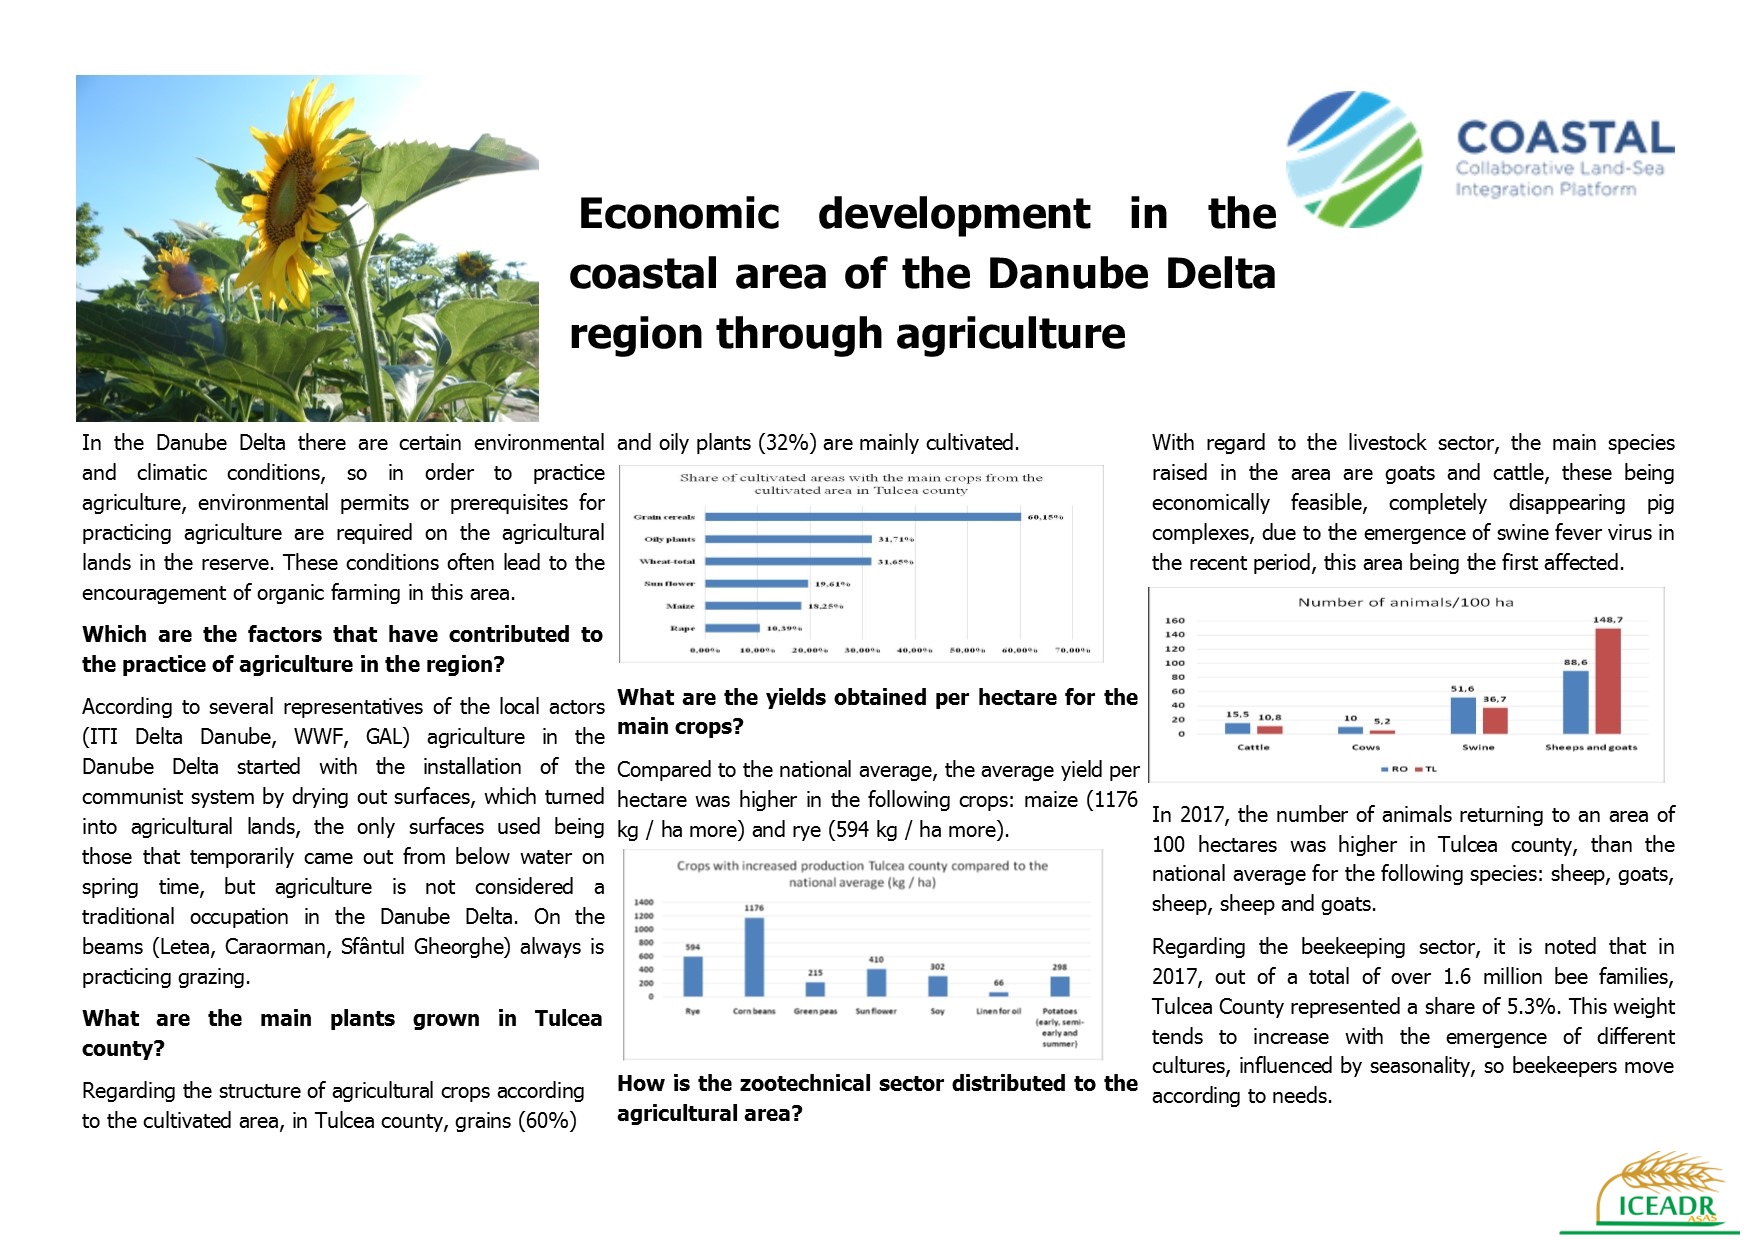 Economic development in the coastal area of the Danube Delta region through agriculture